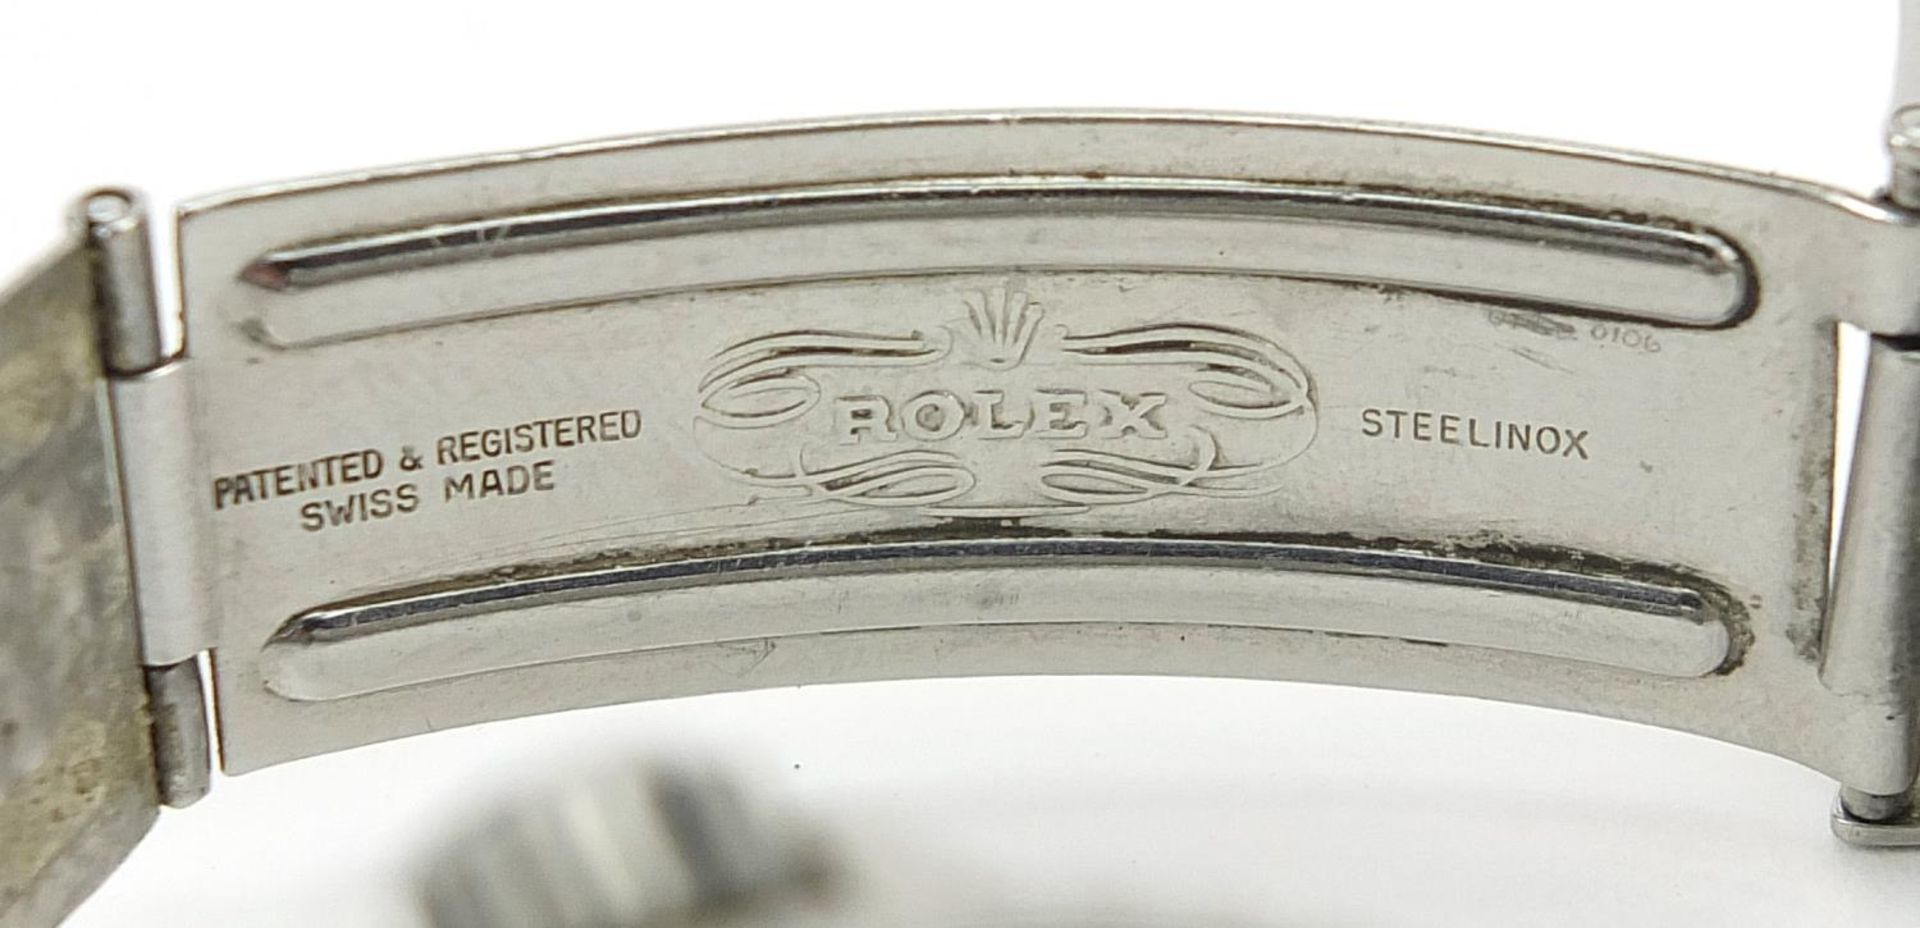 Rolex gentlemen's Submariner automatic wristwatch, ref 5513, serial number 1005684, 40mm in diameter - Image 9 of 9